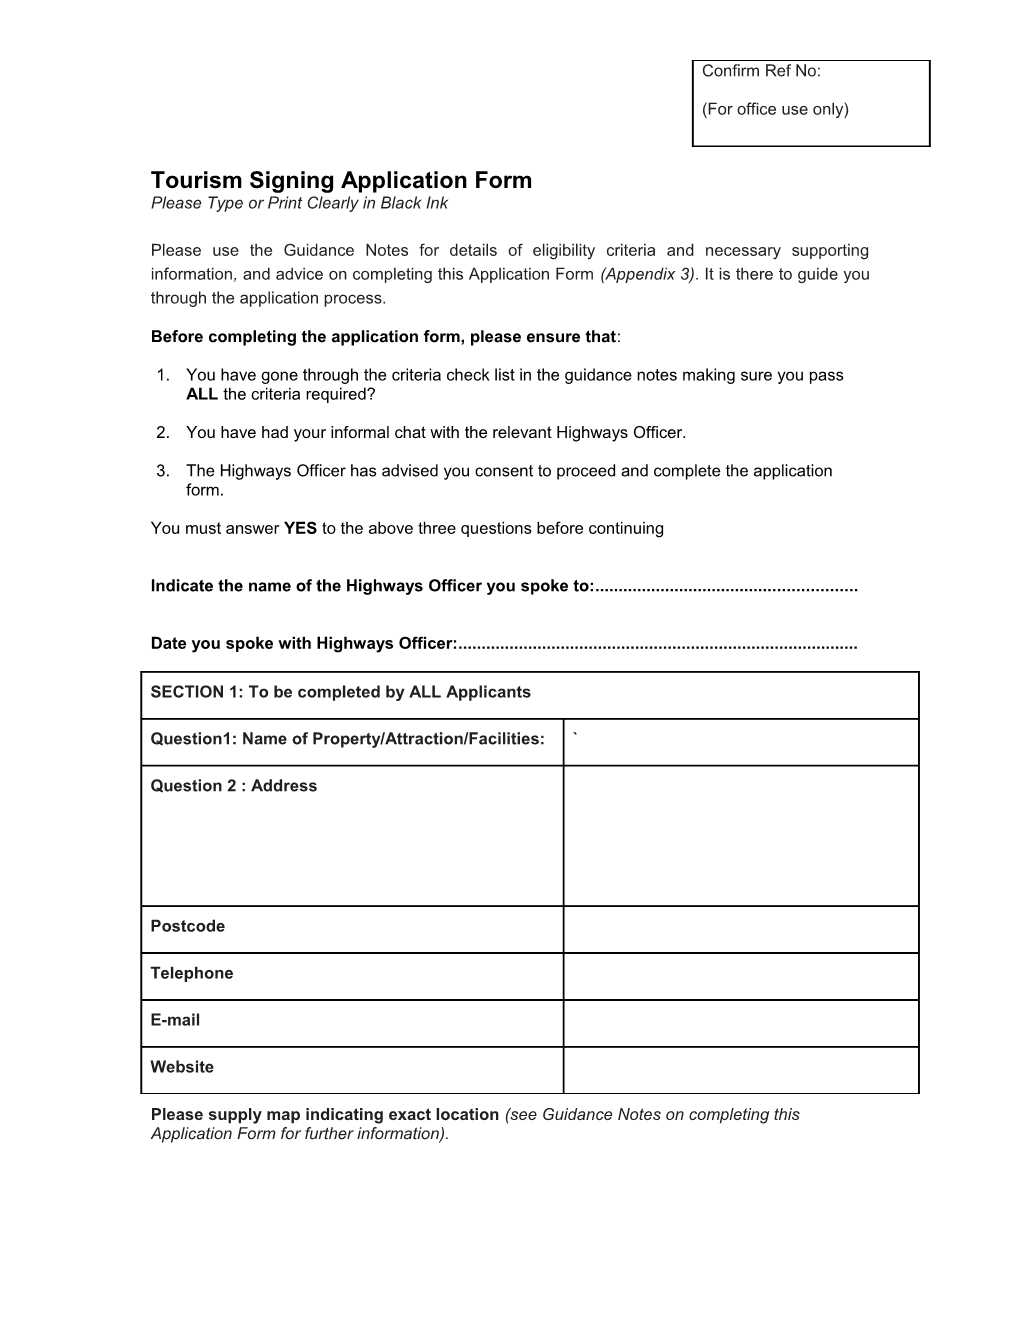 Tourism Signing Application Form